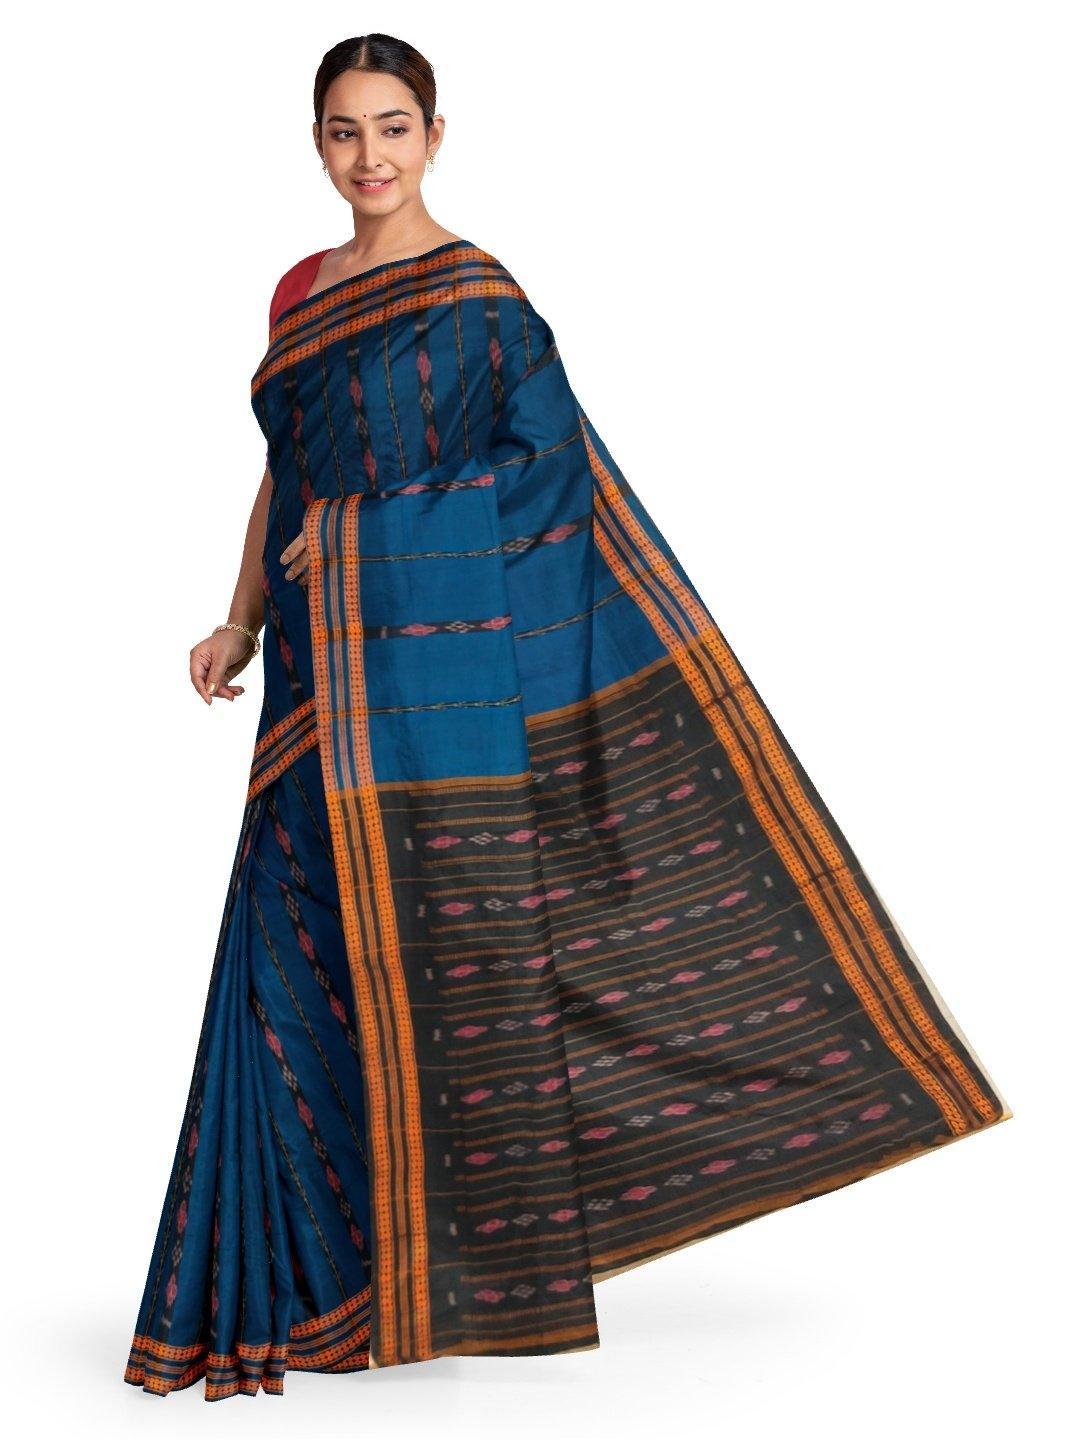 Blue Odisha Cotton Saree with matching Sambalpuri Blouse - Crafts Collection